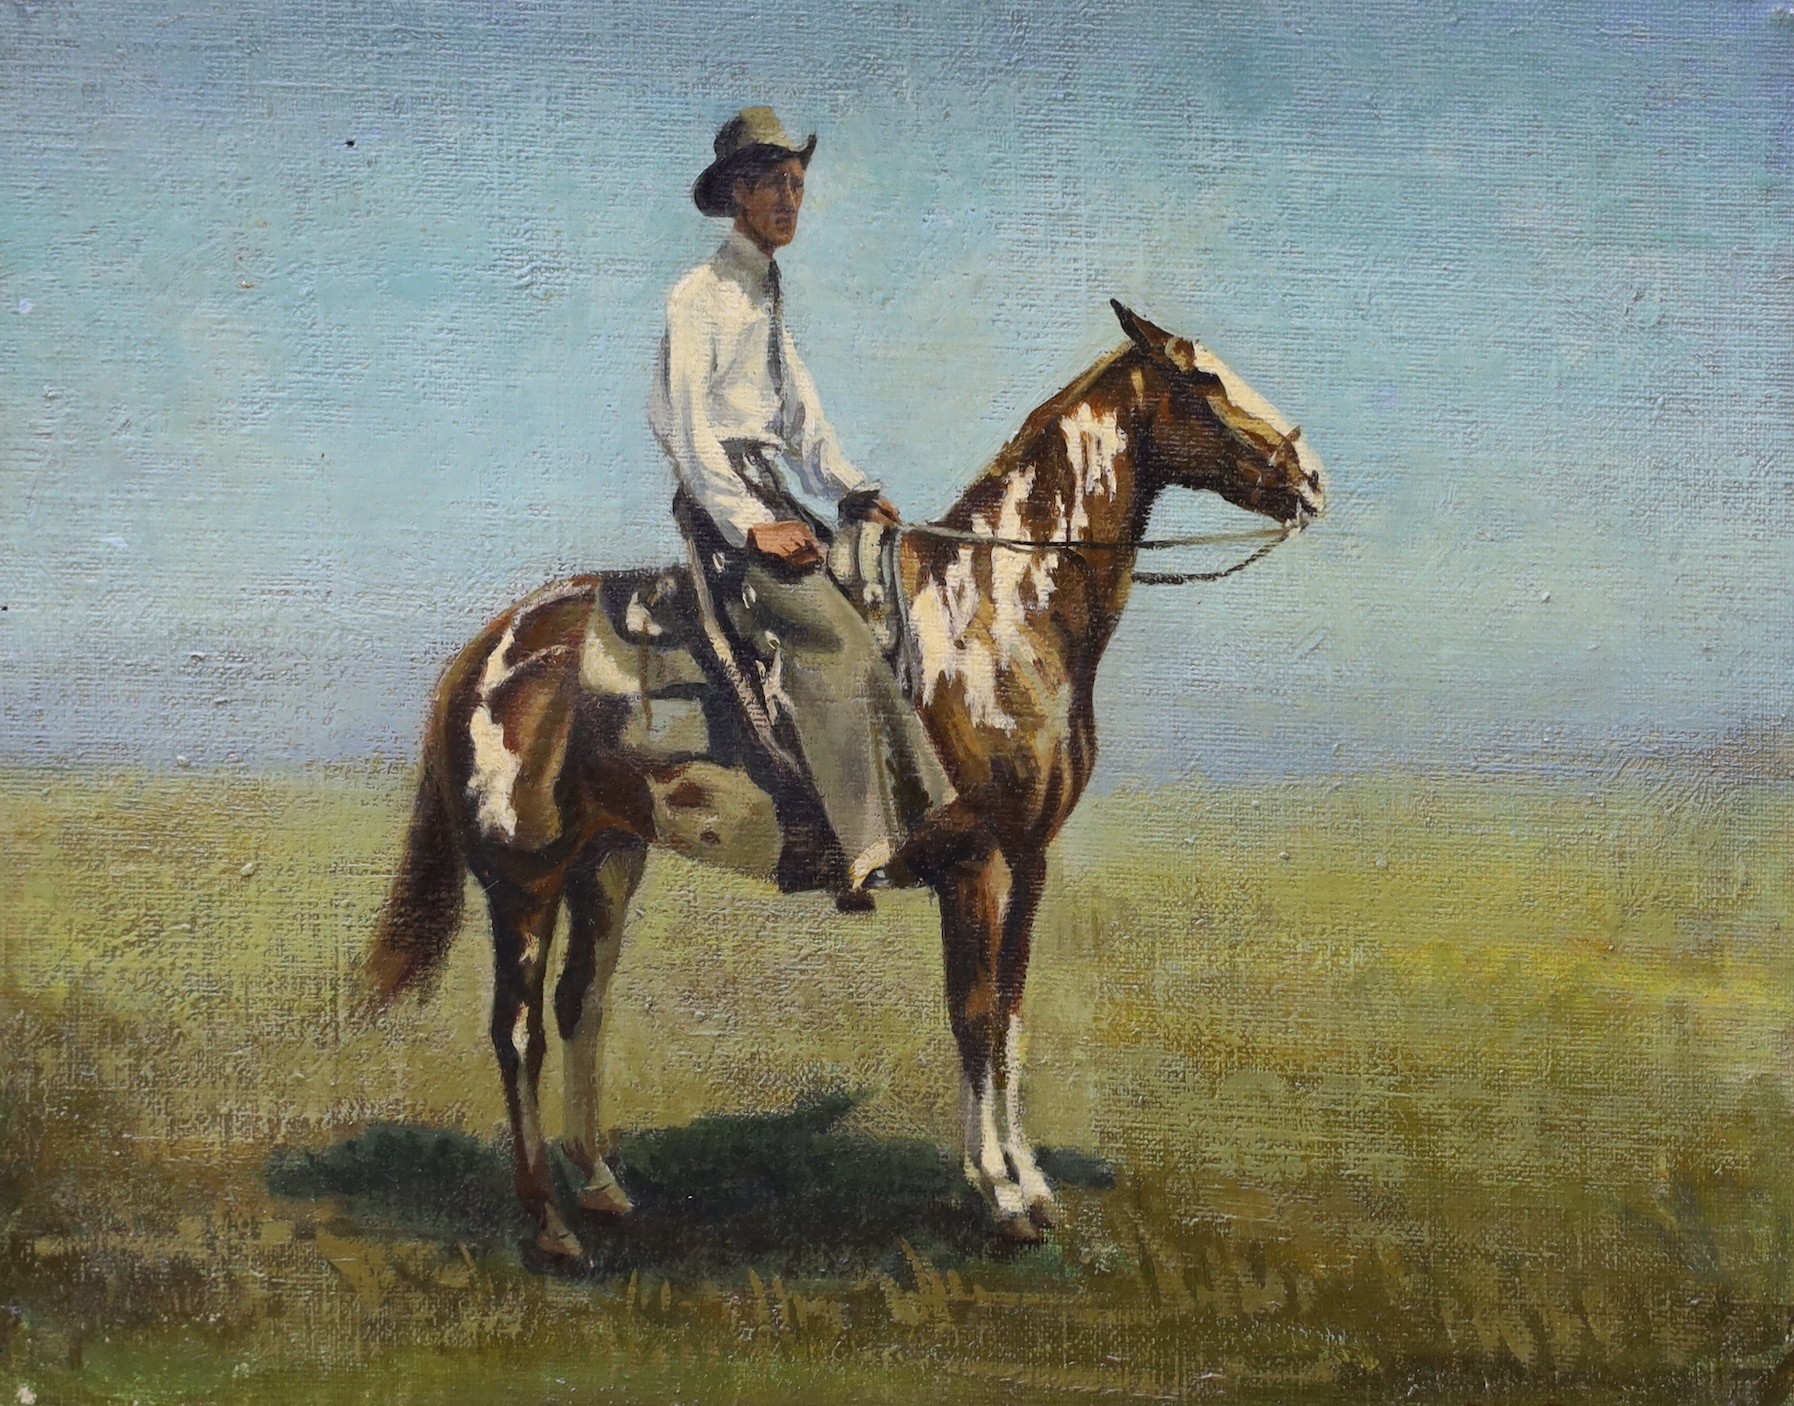 E.M Grant, two oils on canvas board, Equestrian studies, signed, 23 x 29cm